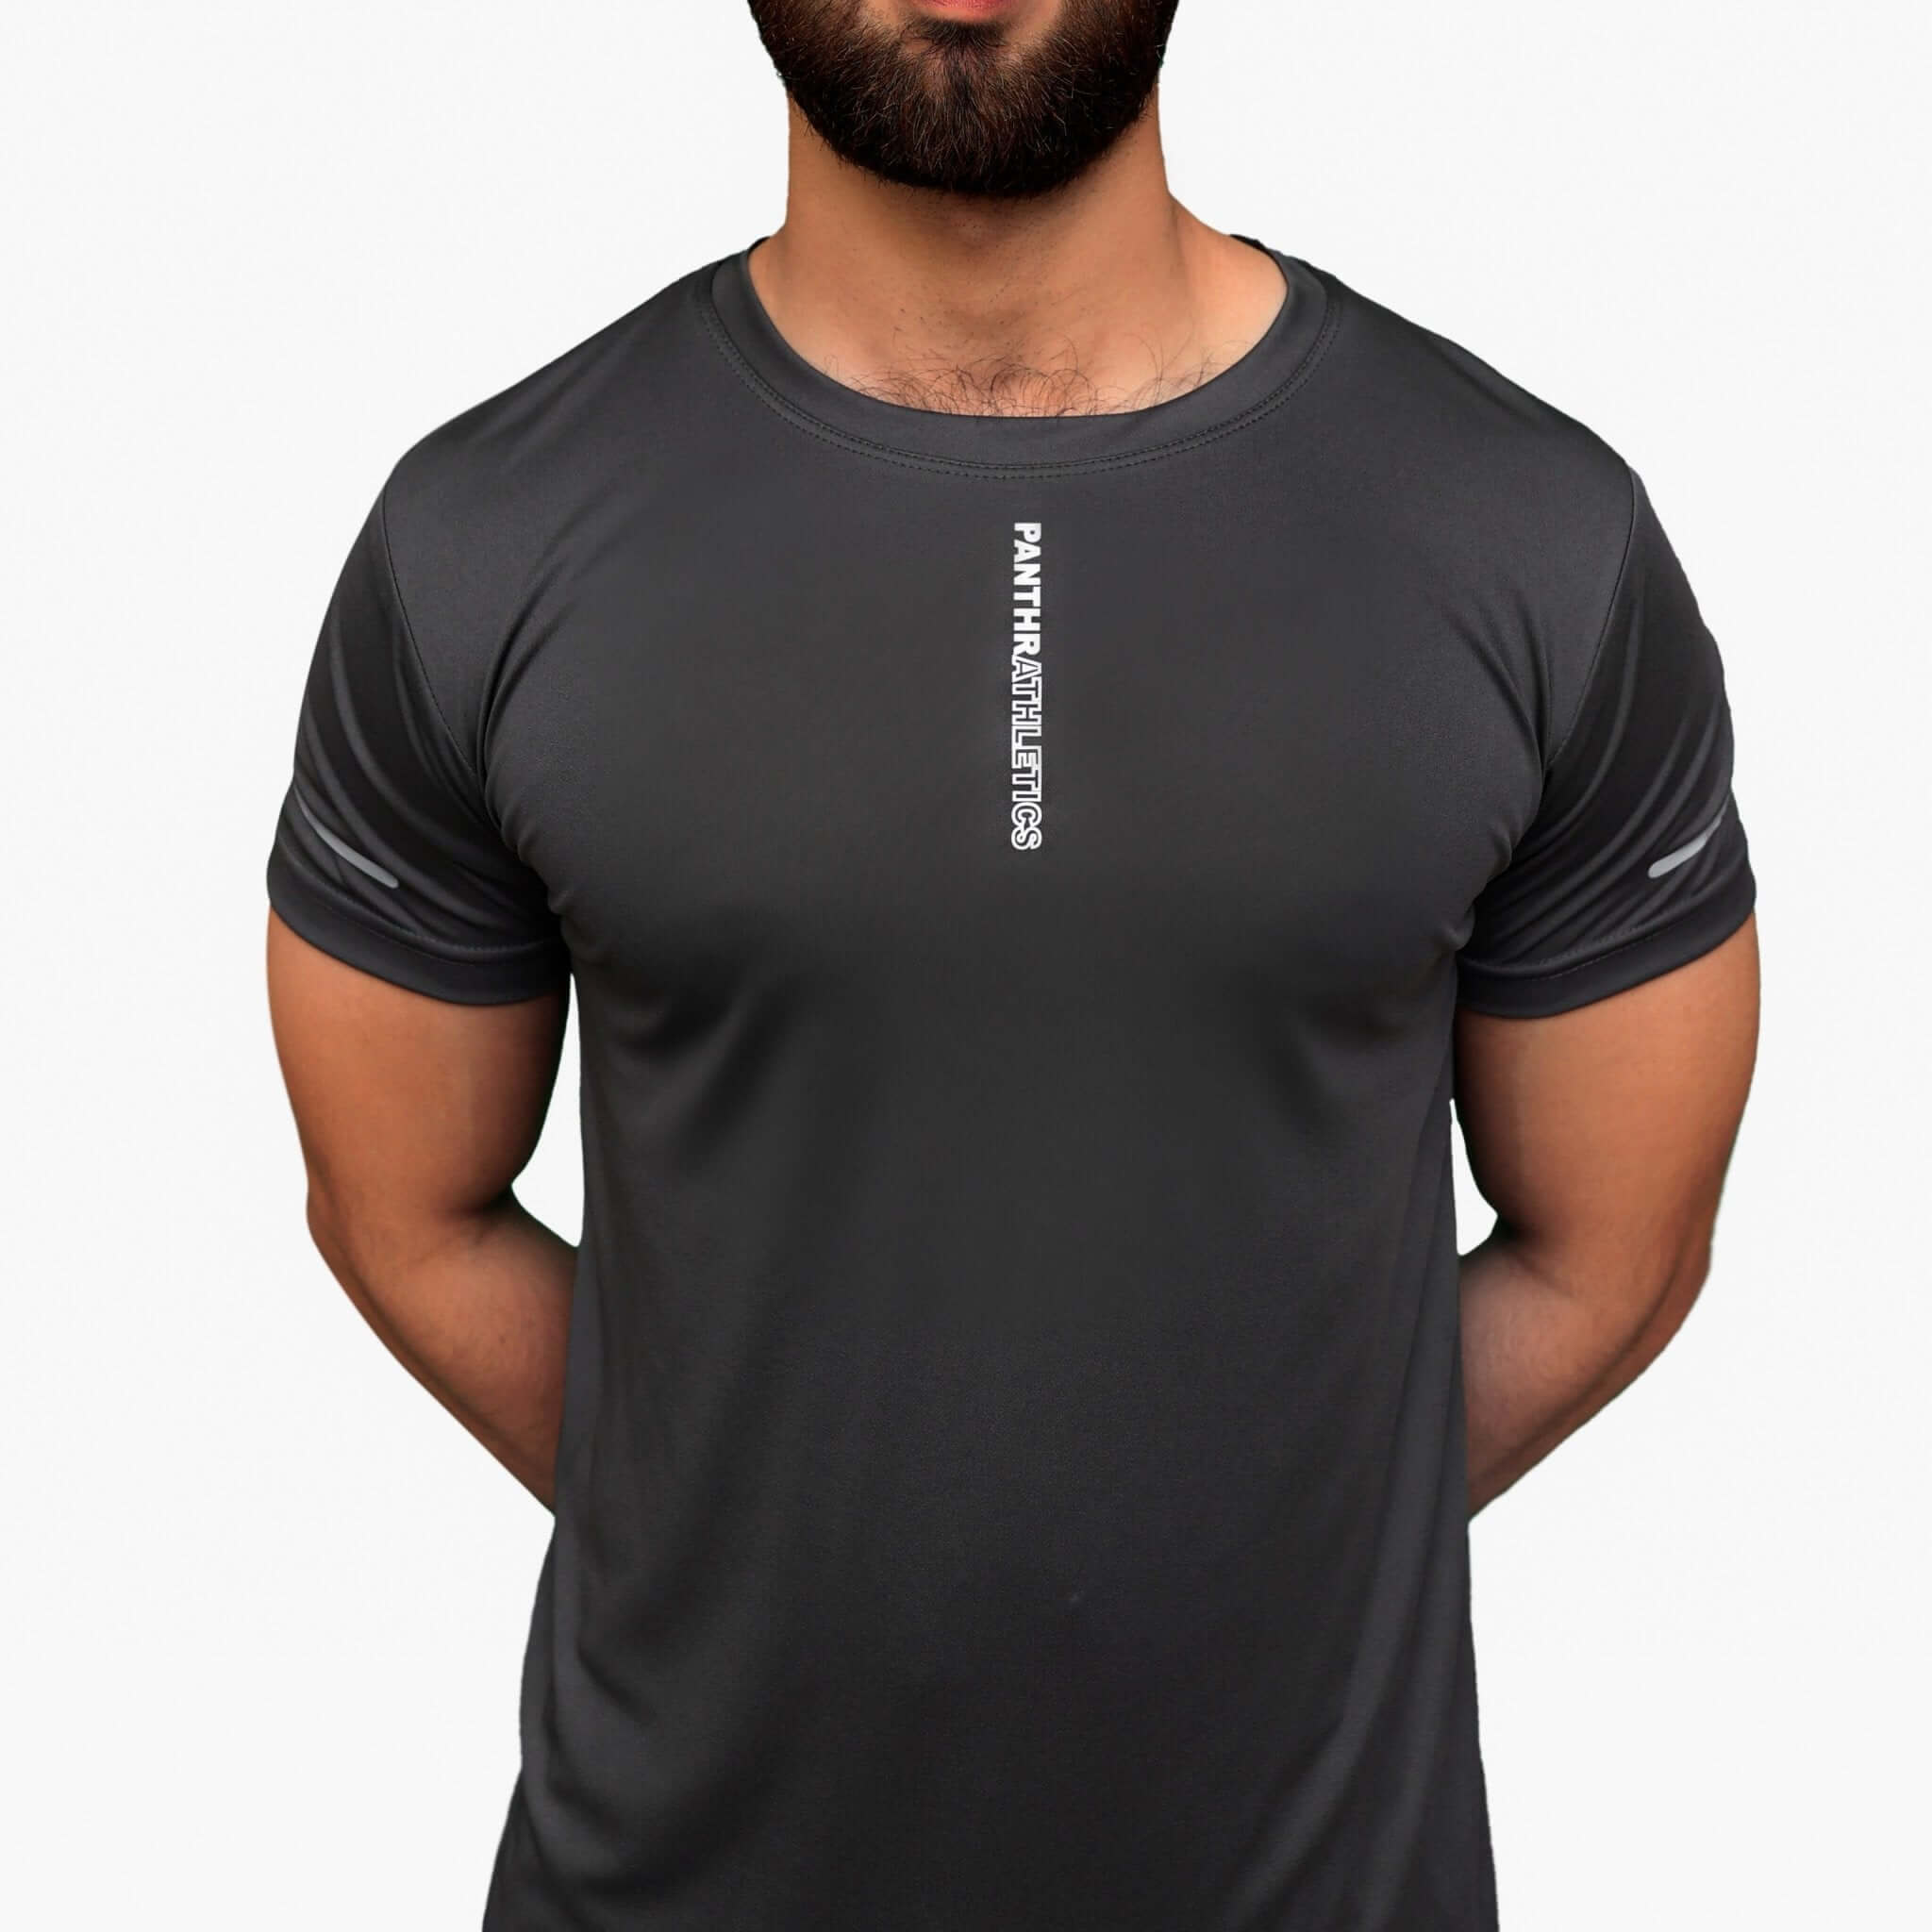 Panthr Athletics Grey T Shirt - Panthr